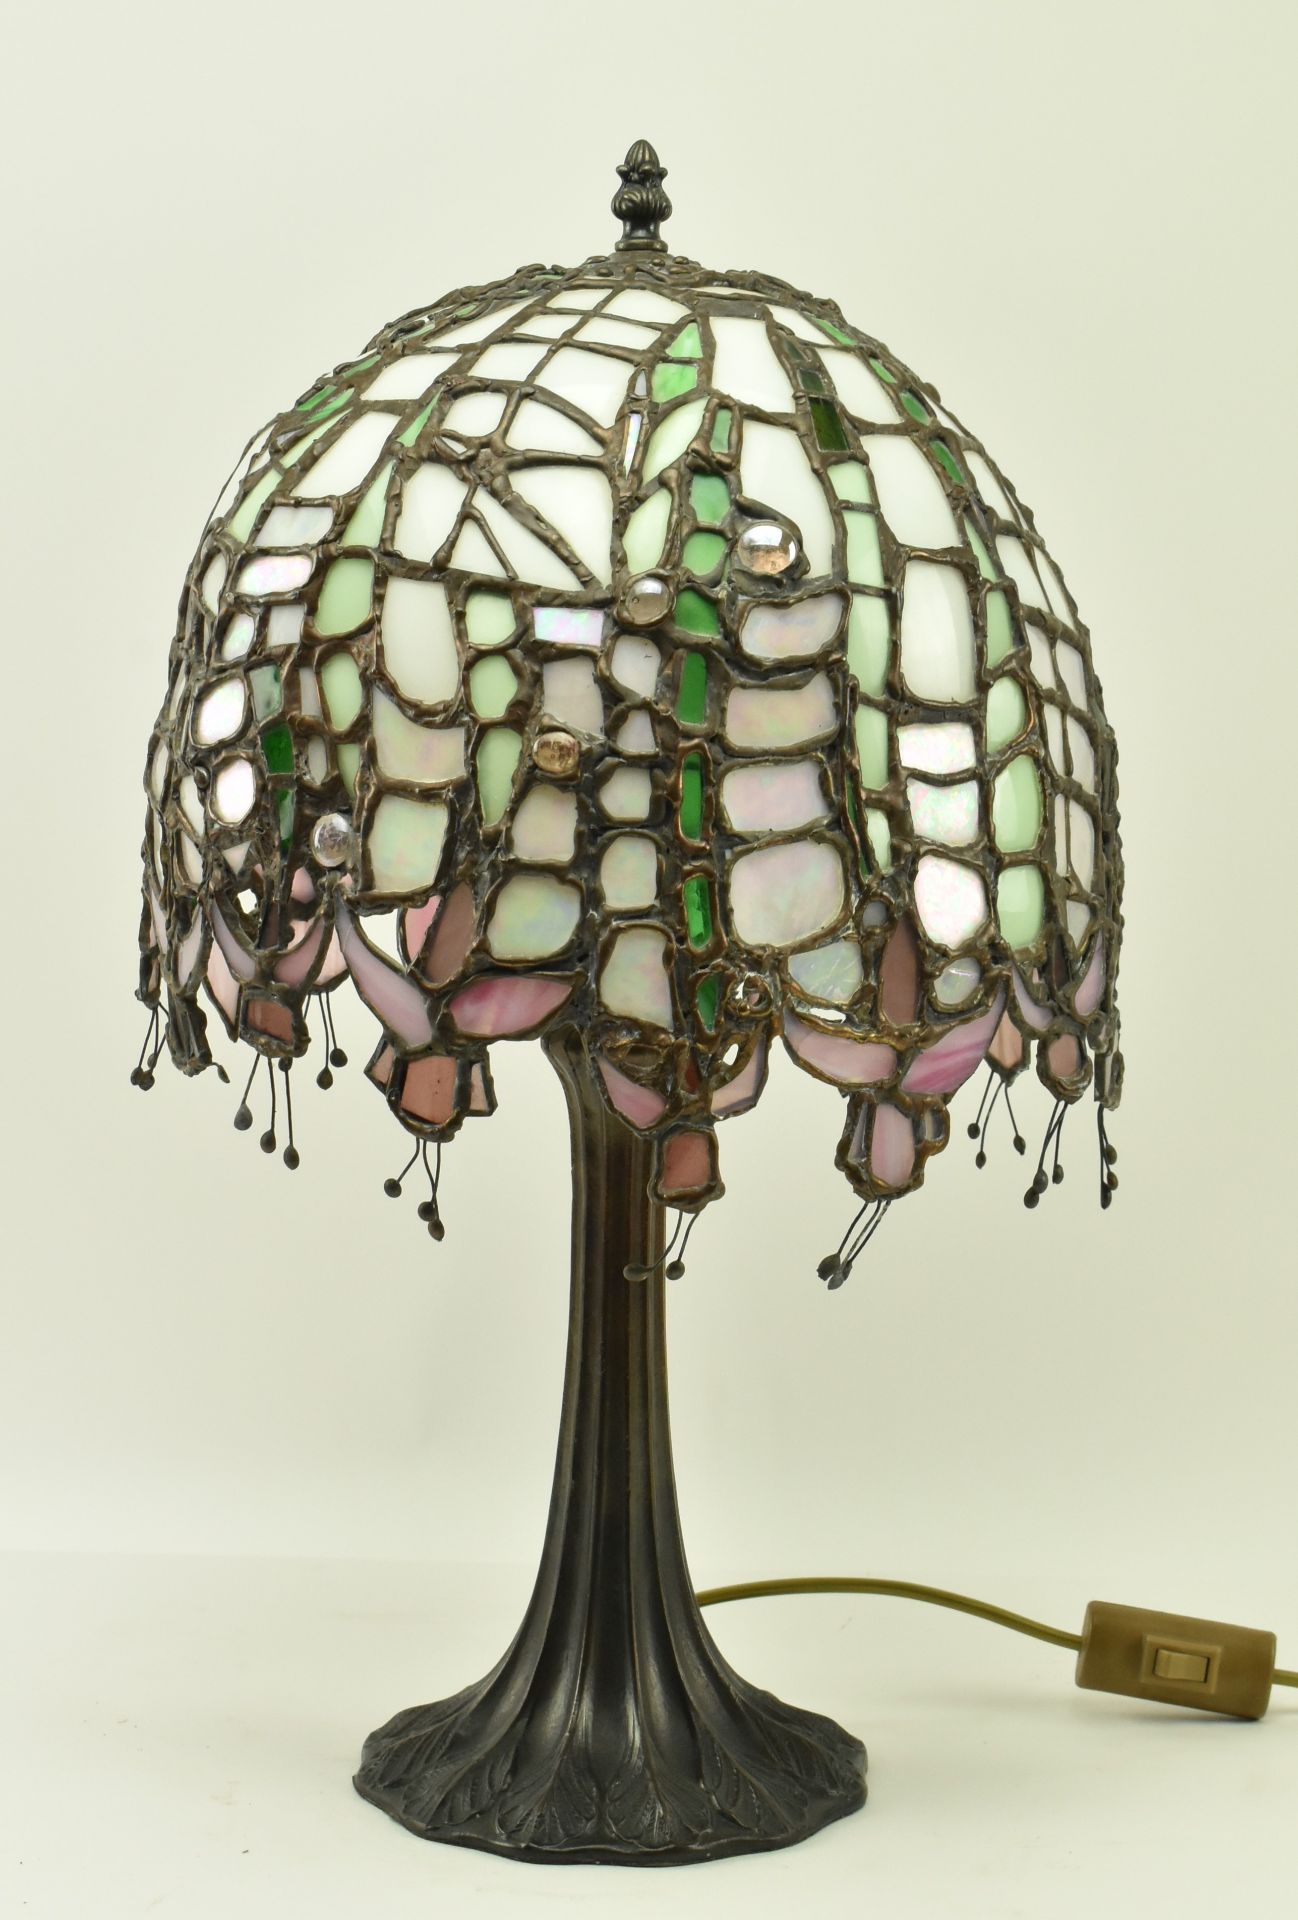 JOHN LEATHWOOD - STAINED LEADED GLASS TIFFANY STYLE DESK LAMP